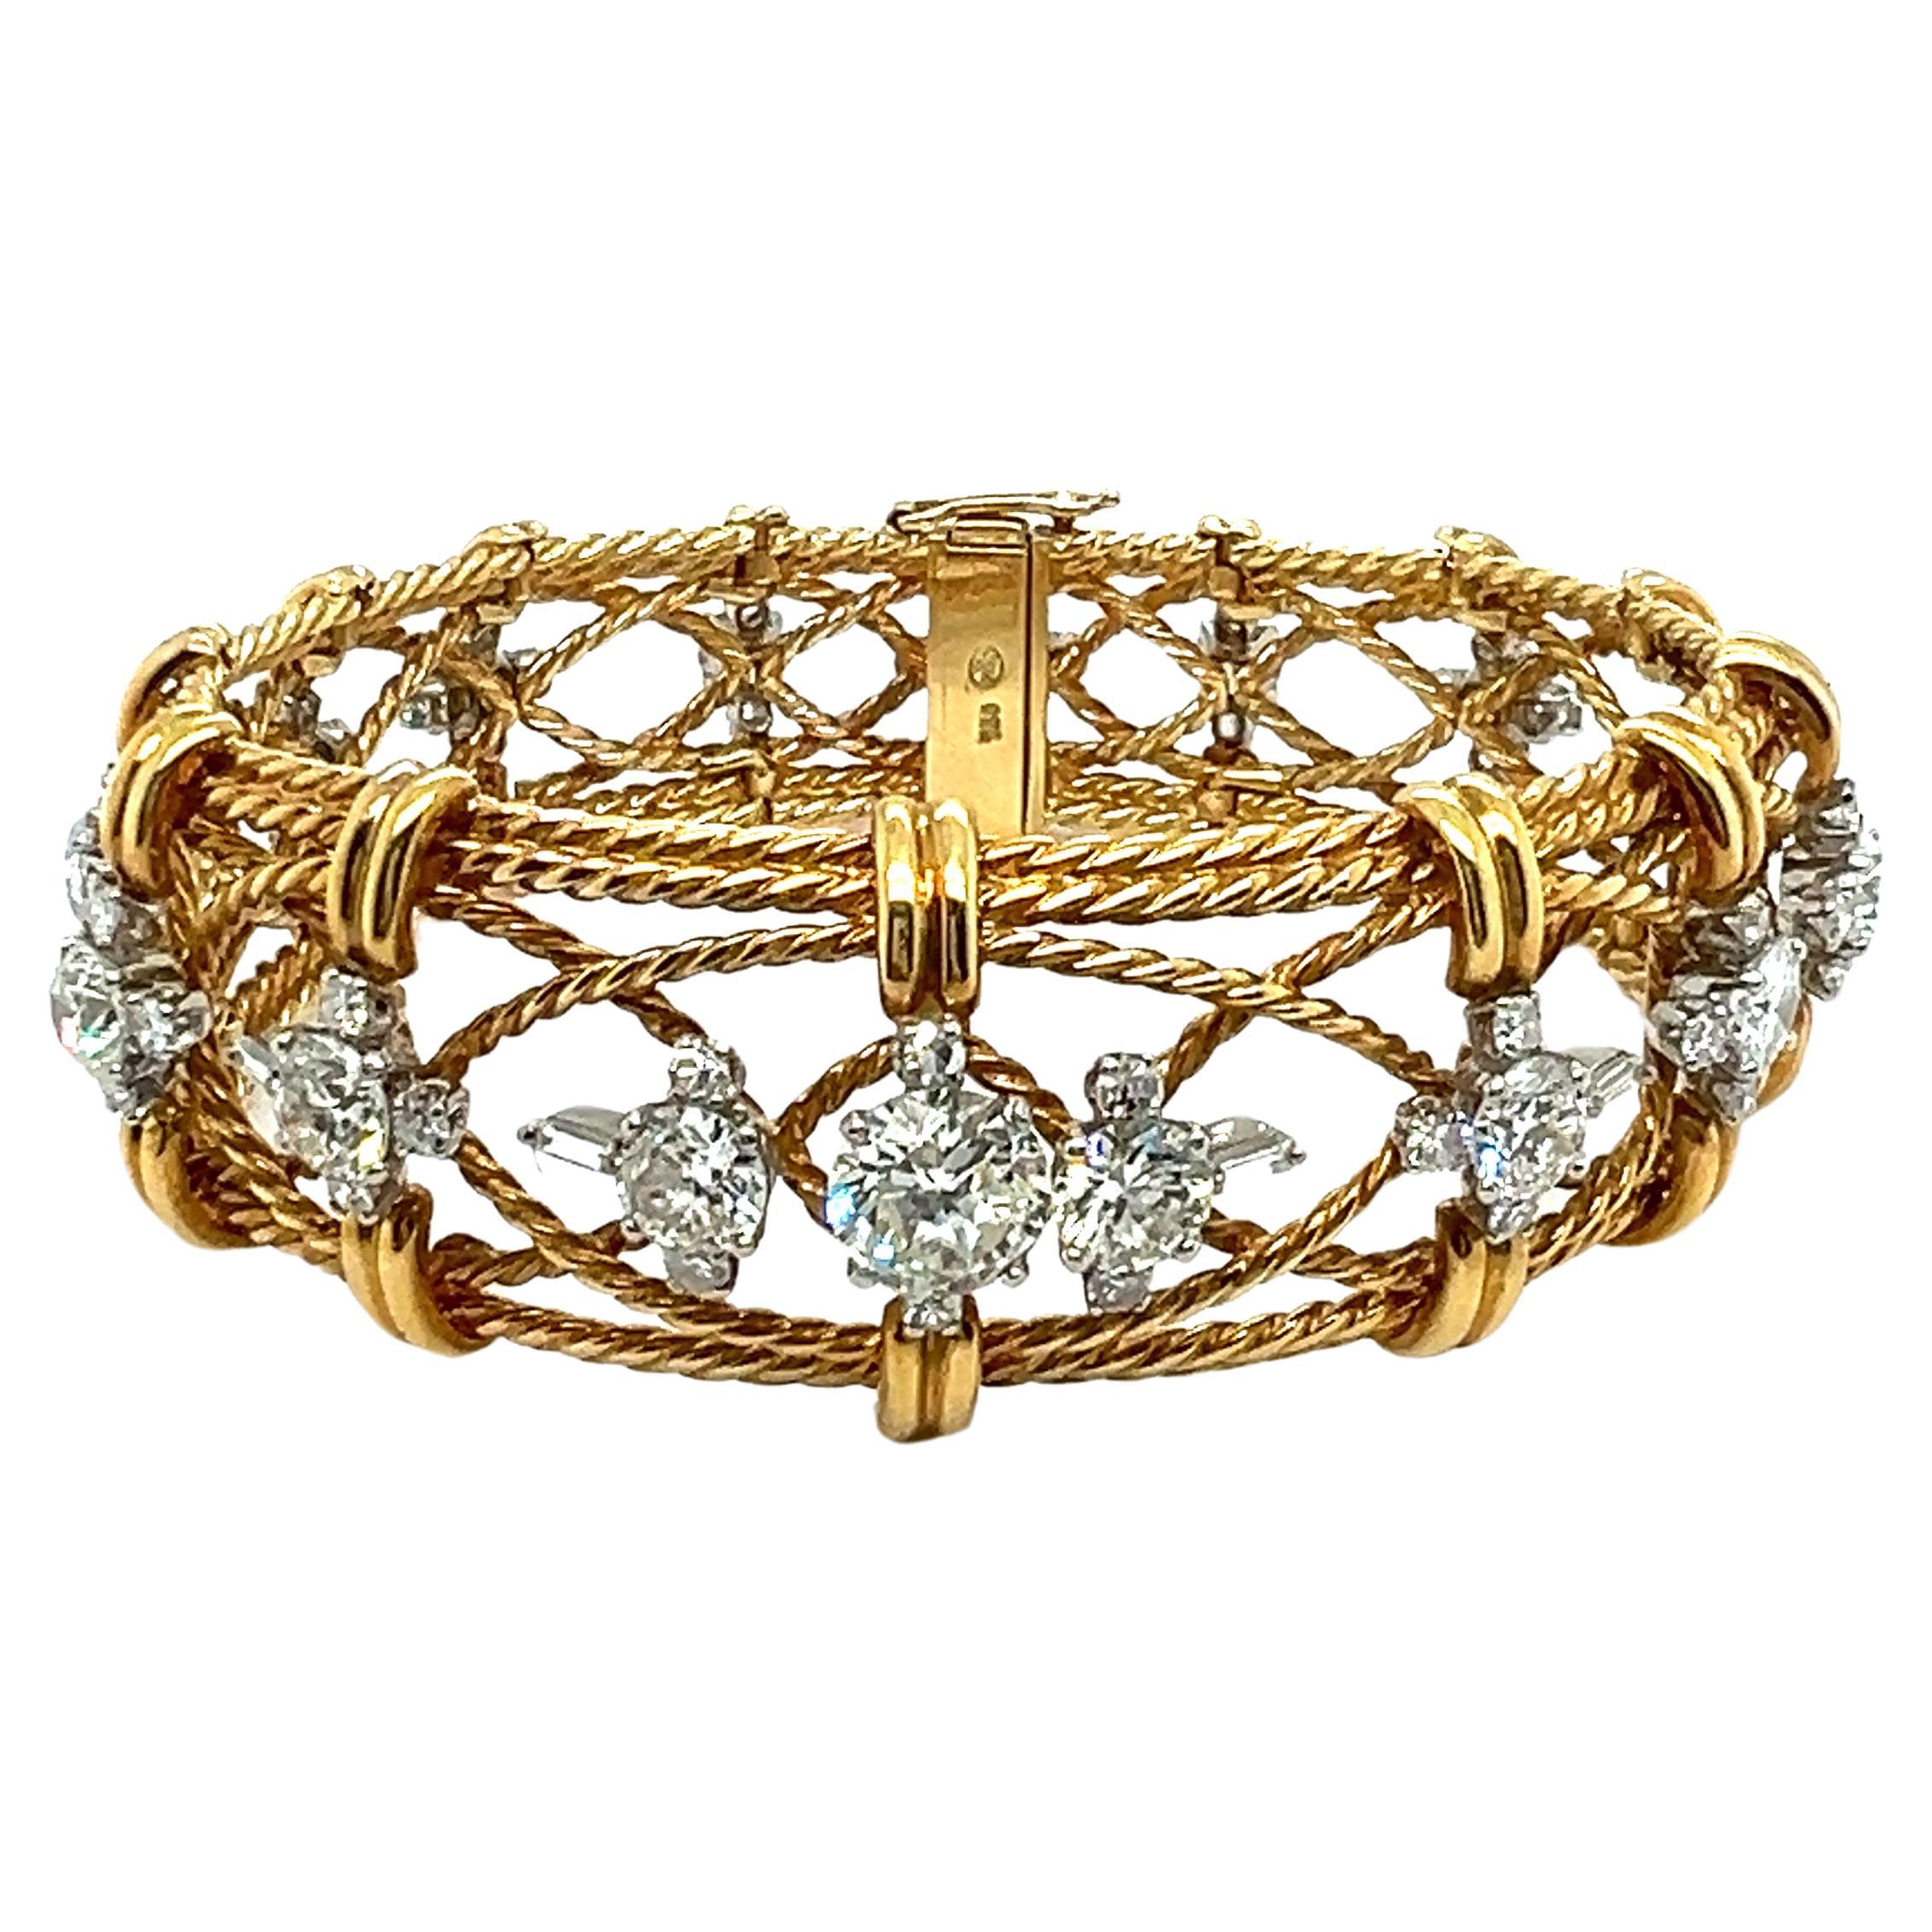 Vintage Bracelet with Diamonds in 18 Karat Gold by Gübelin